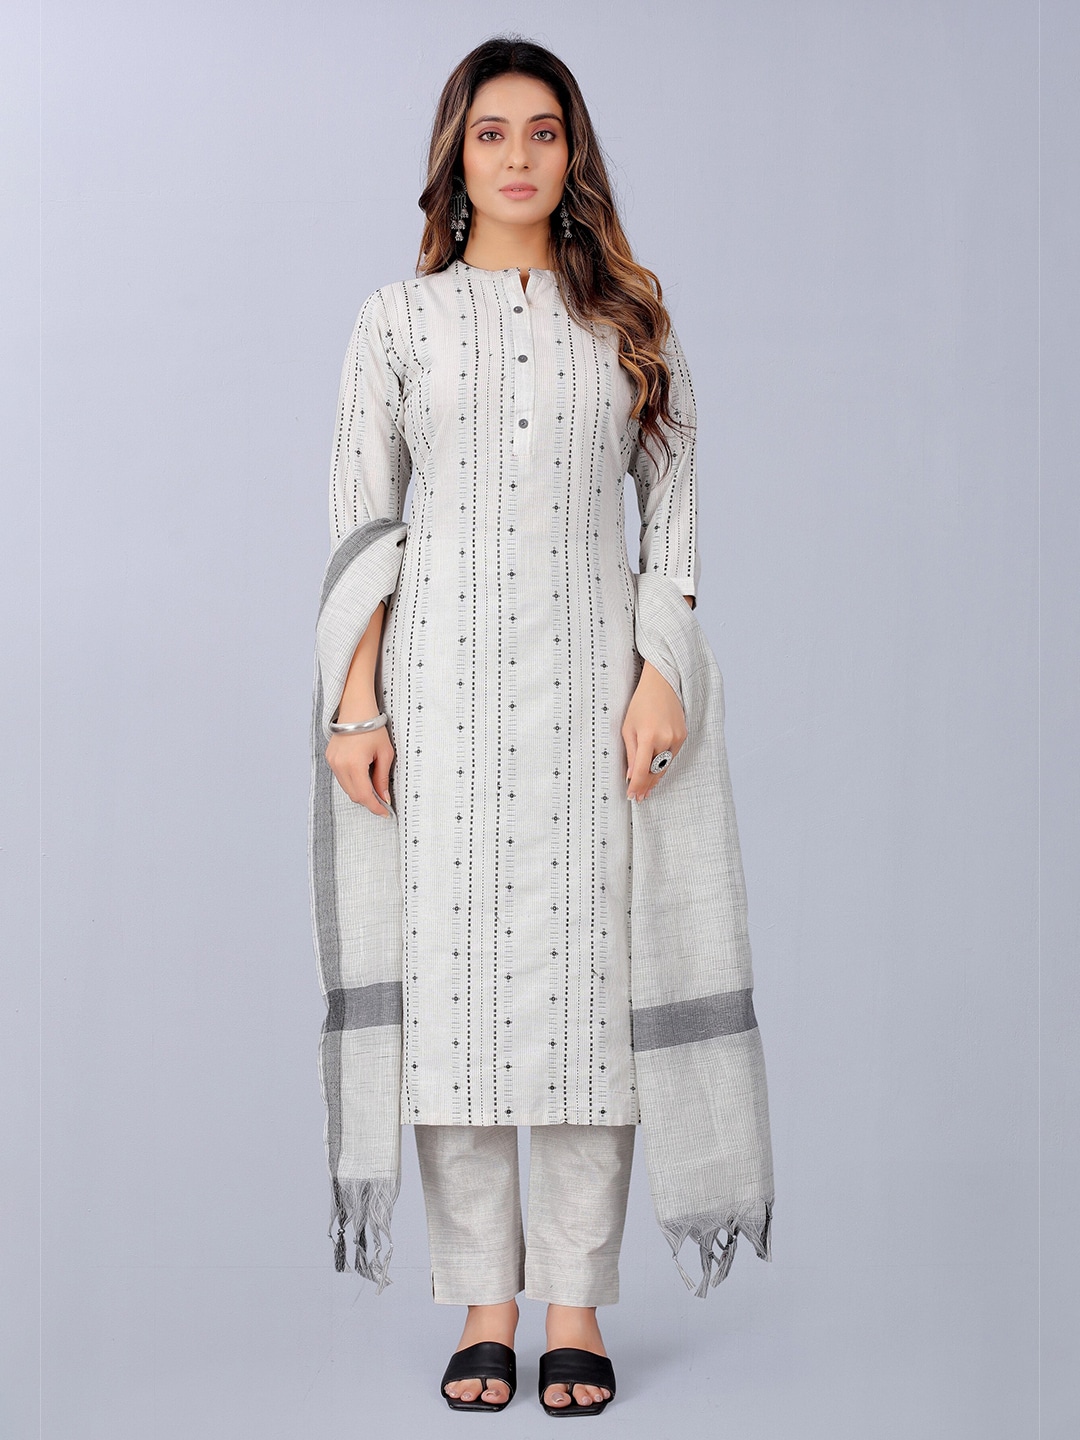 ASPORA Off White & Black Pure Cotton Unstitched Dress Material Price in India